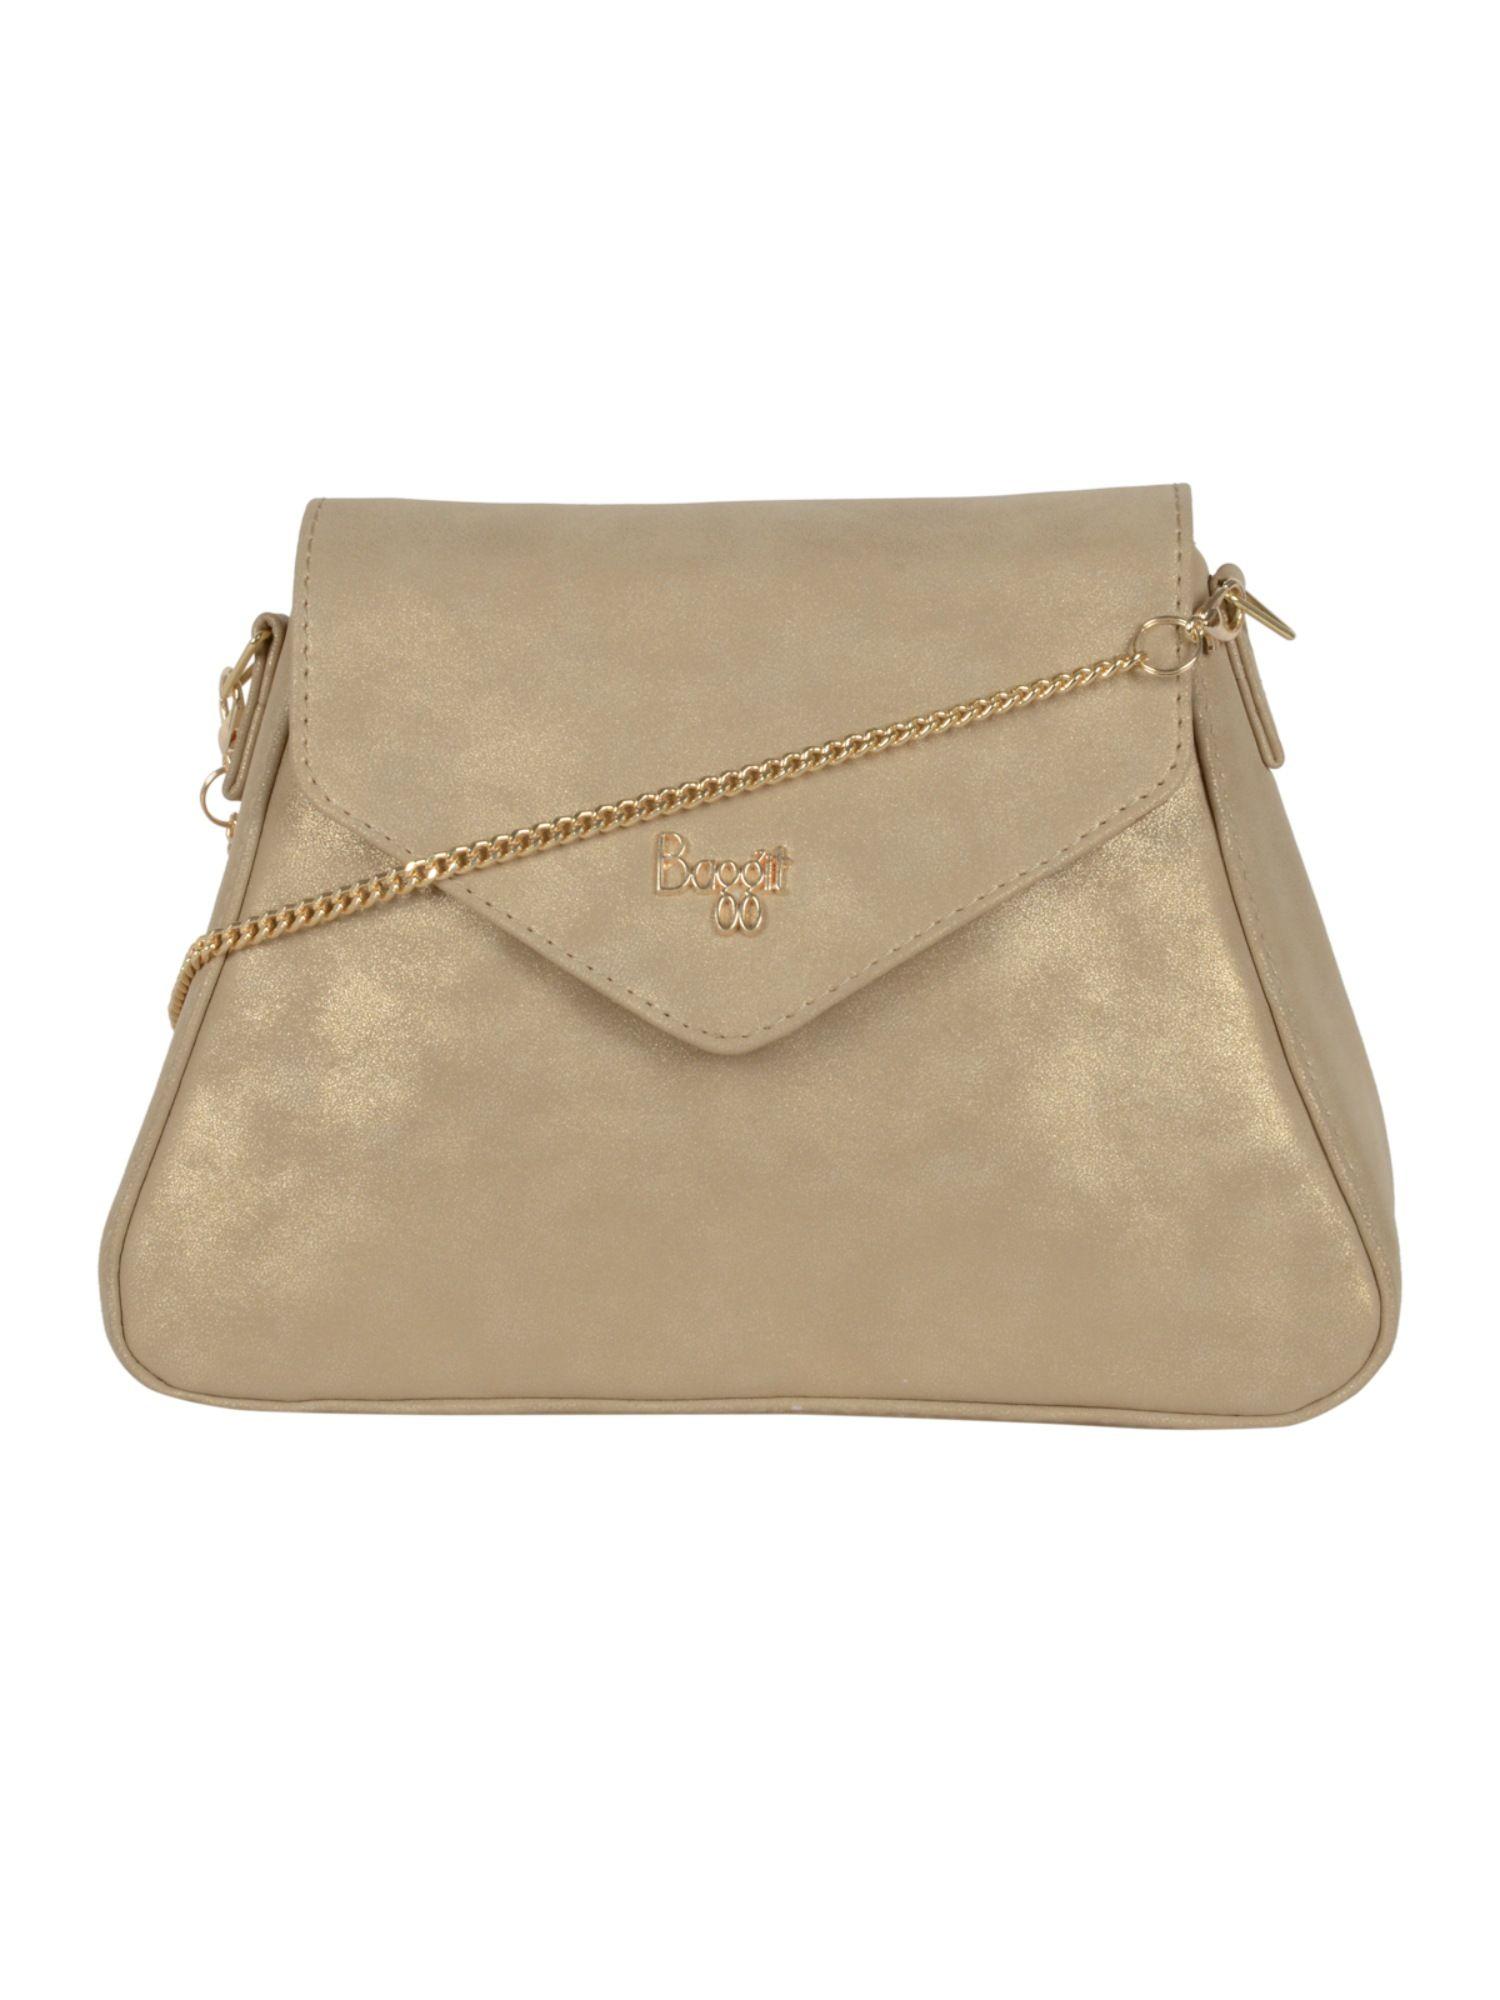 jessica xxs gold sling bag